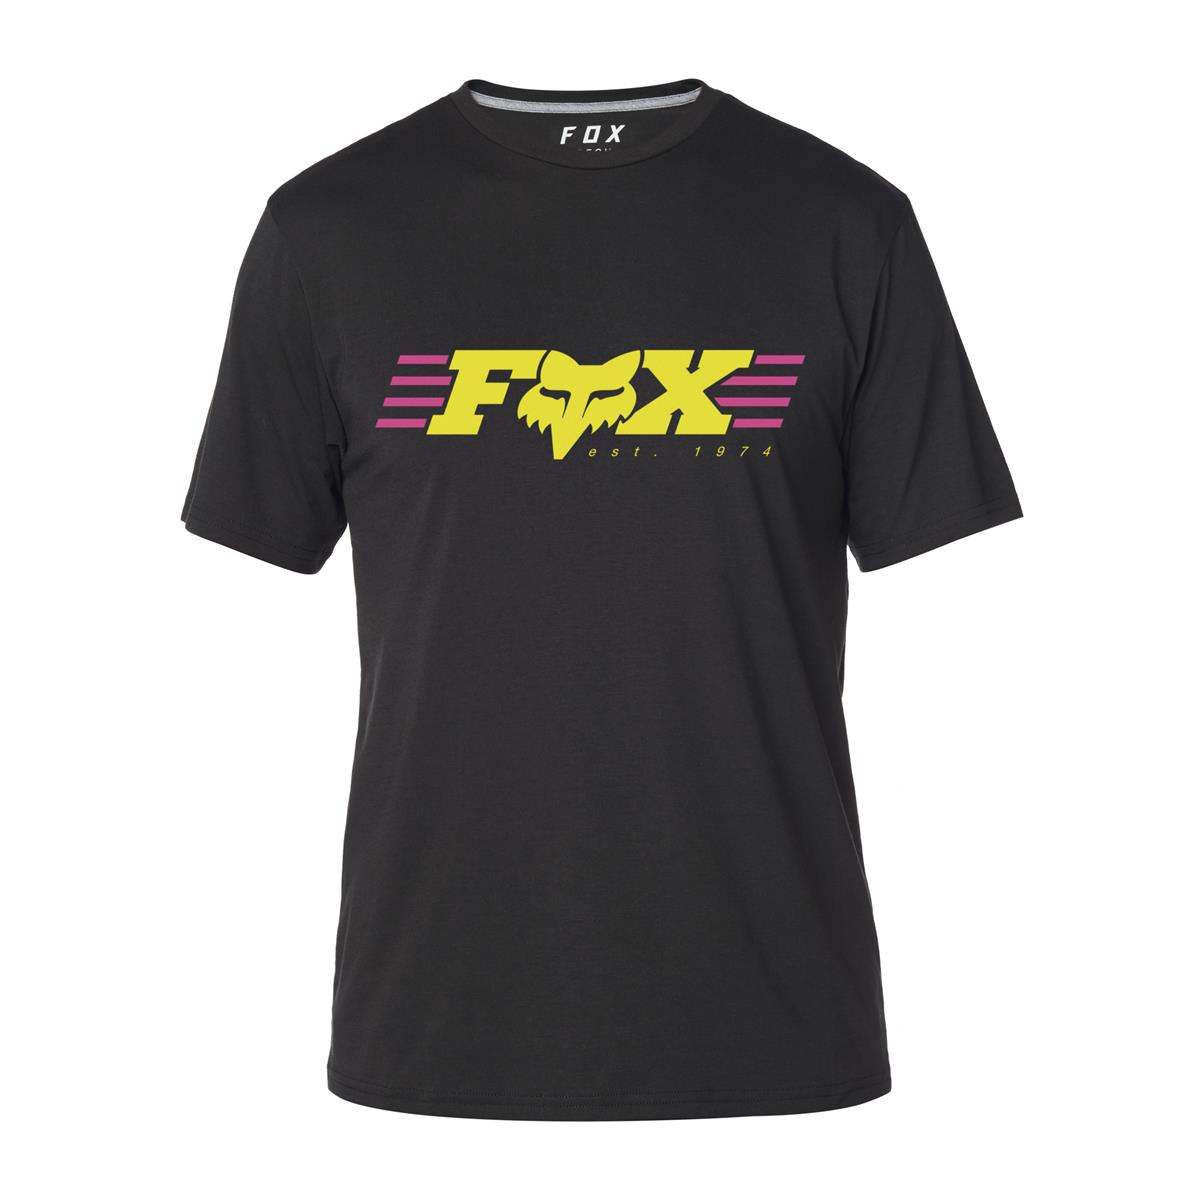 Fox T-Shirt Muffler Limited Edition A1 - Black/Yellow